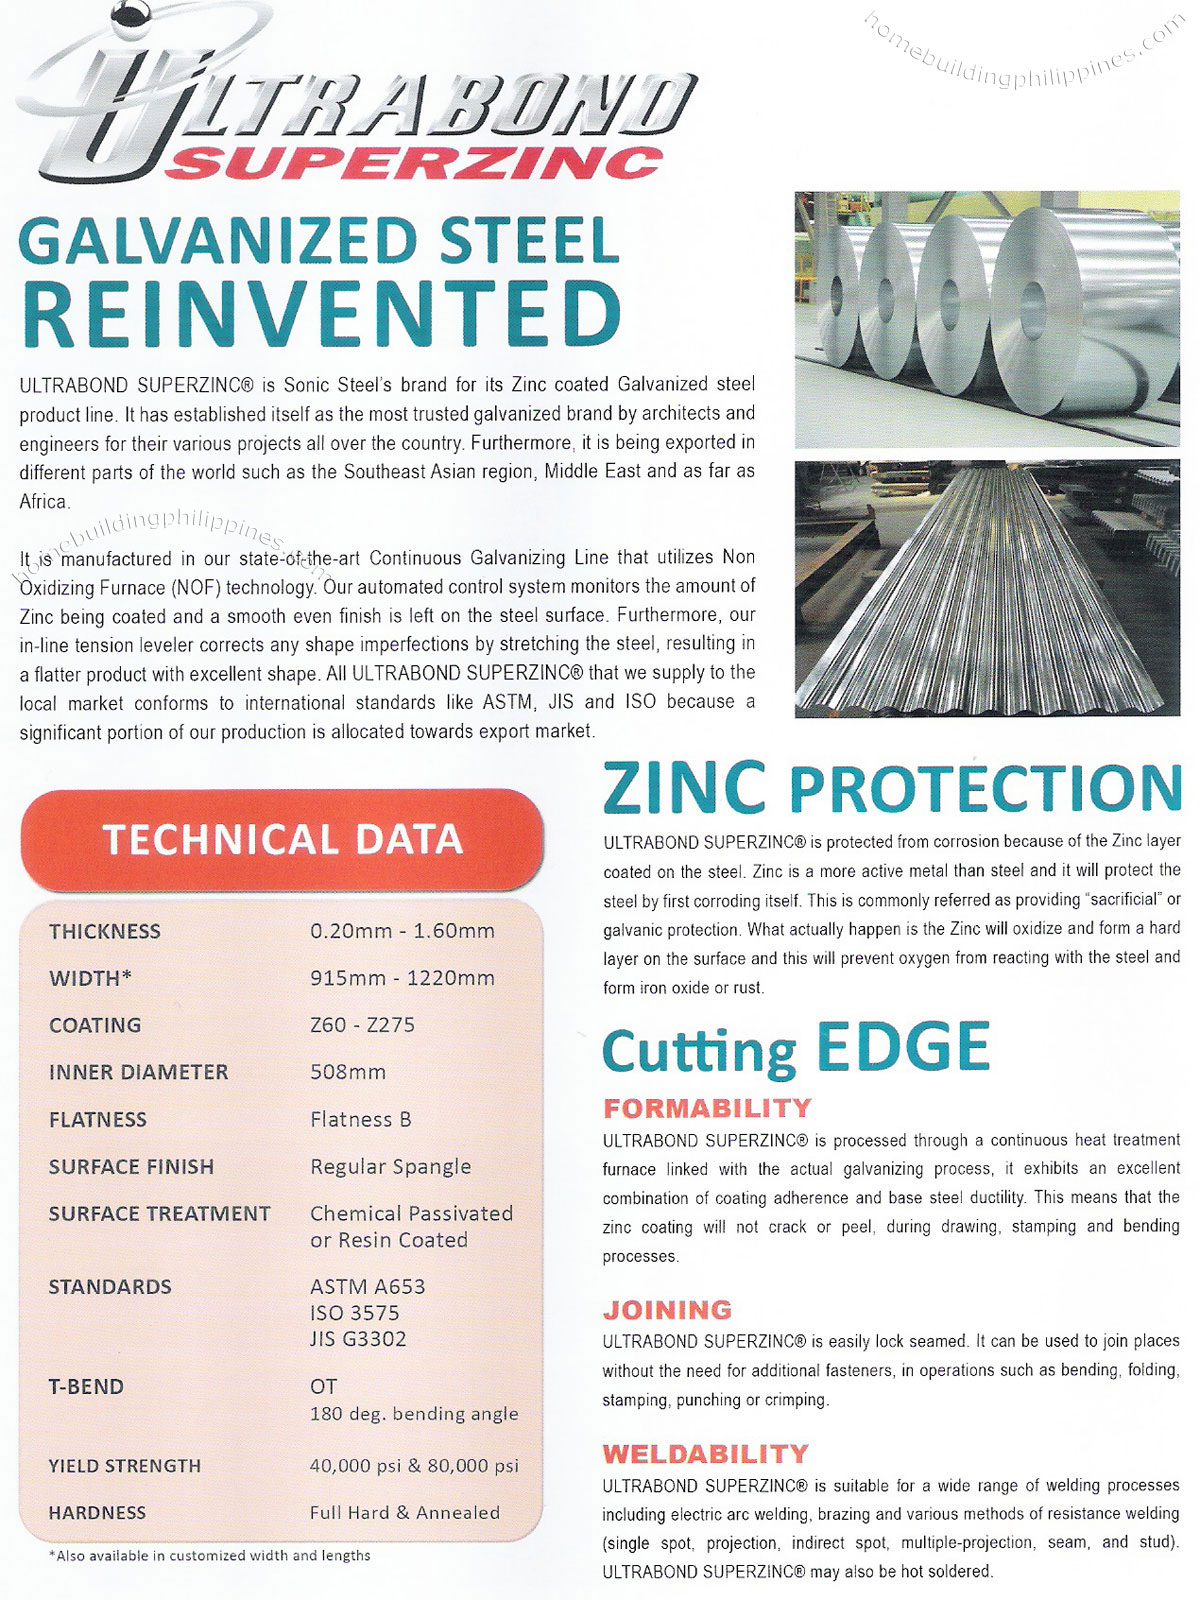 ultrabond galvanized steel zinc protection formability joining weldability